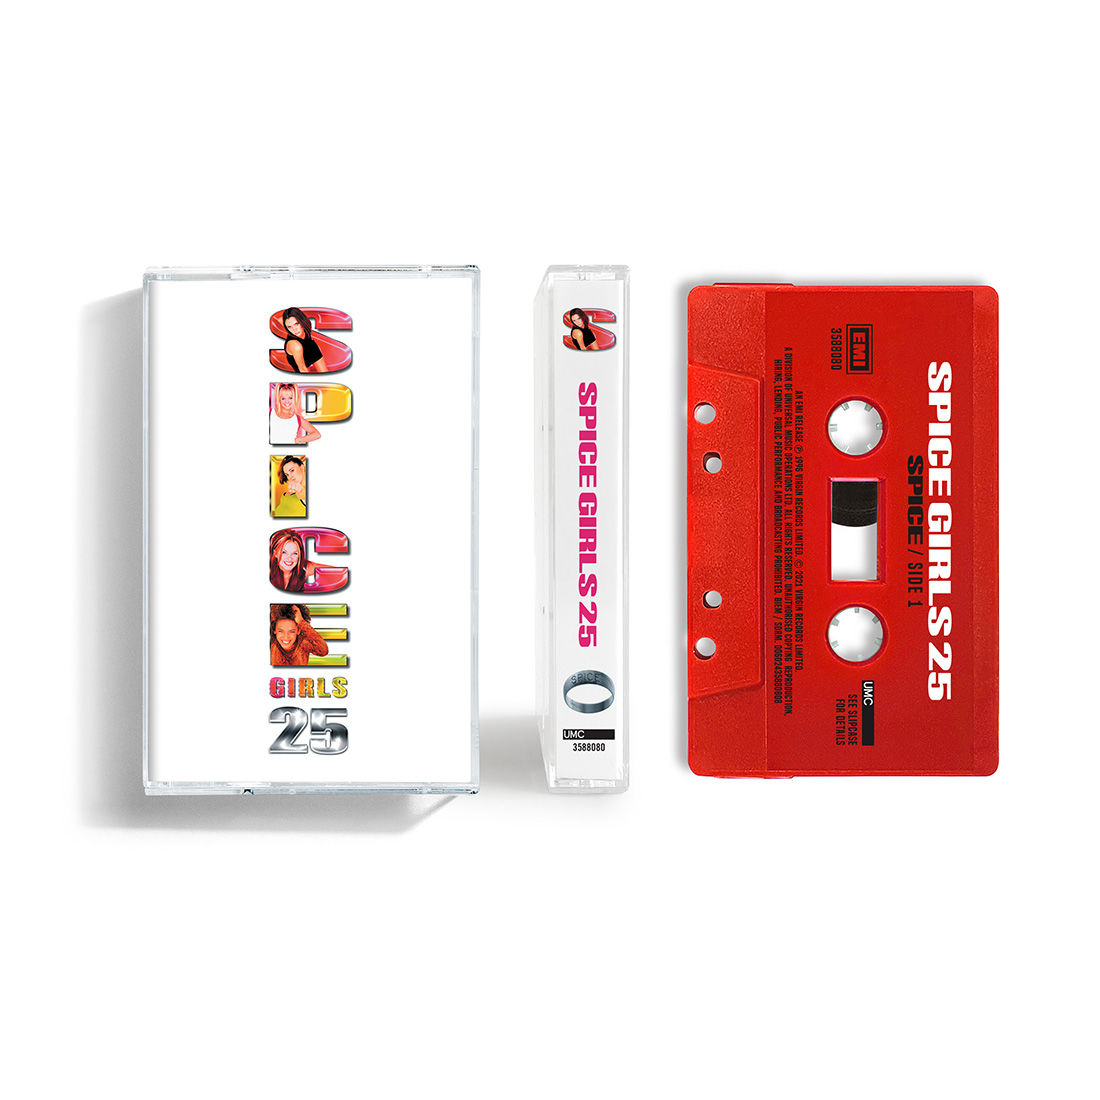 Spice Girls - Spice - 25th Anniversary: (‘Posh’ Red Coloured) Cassette